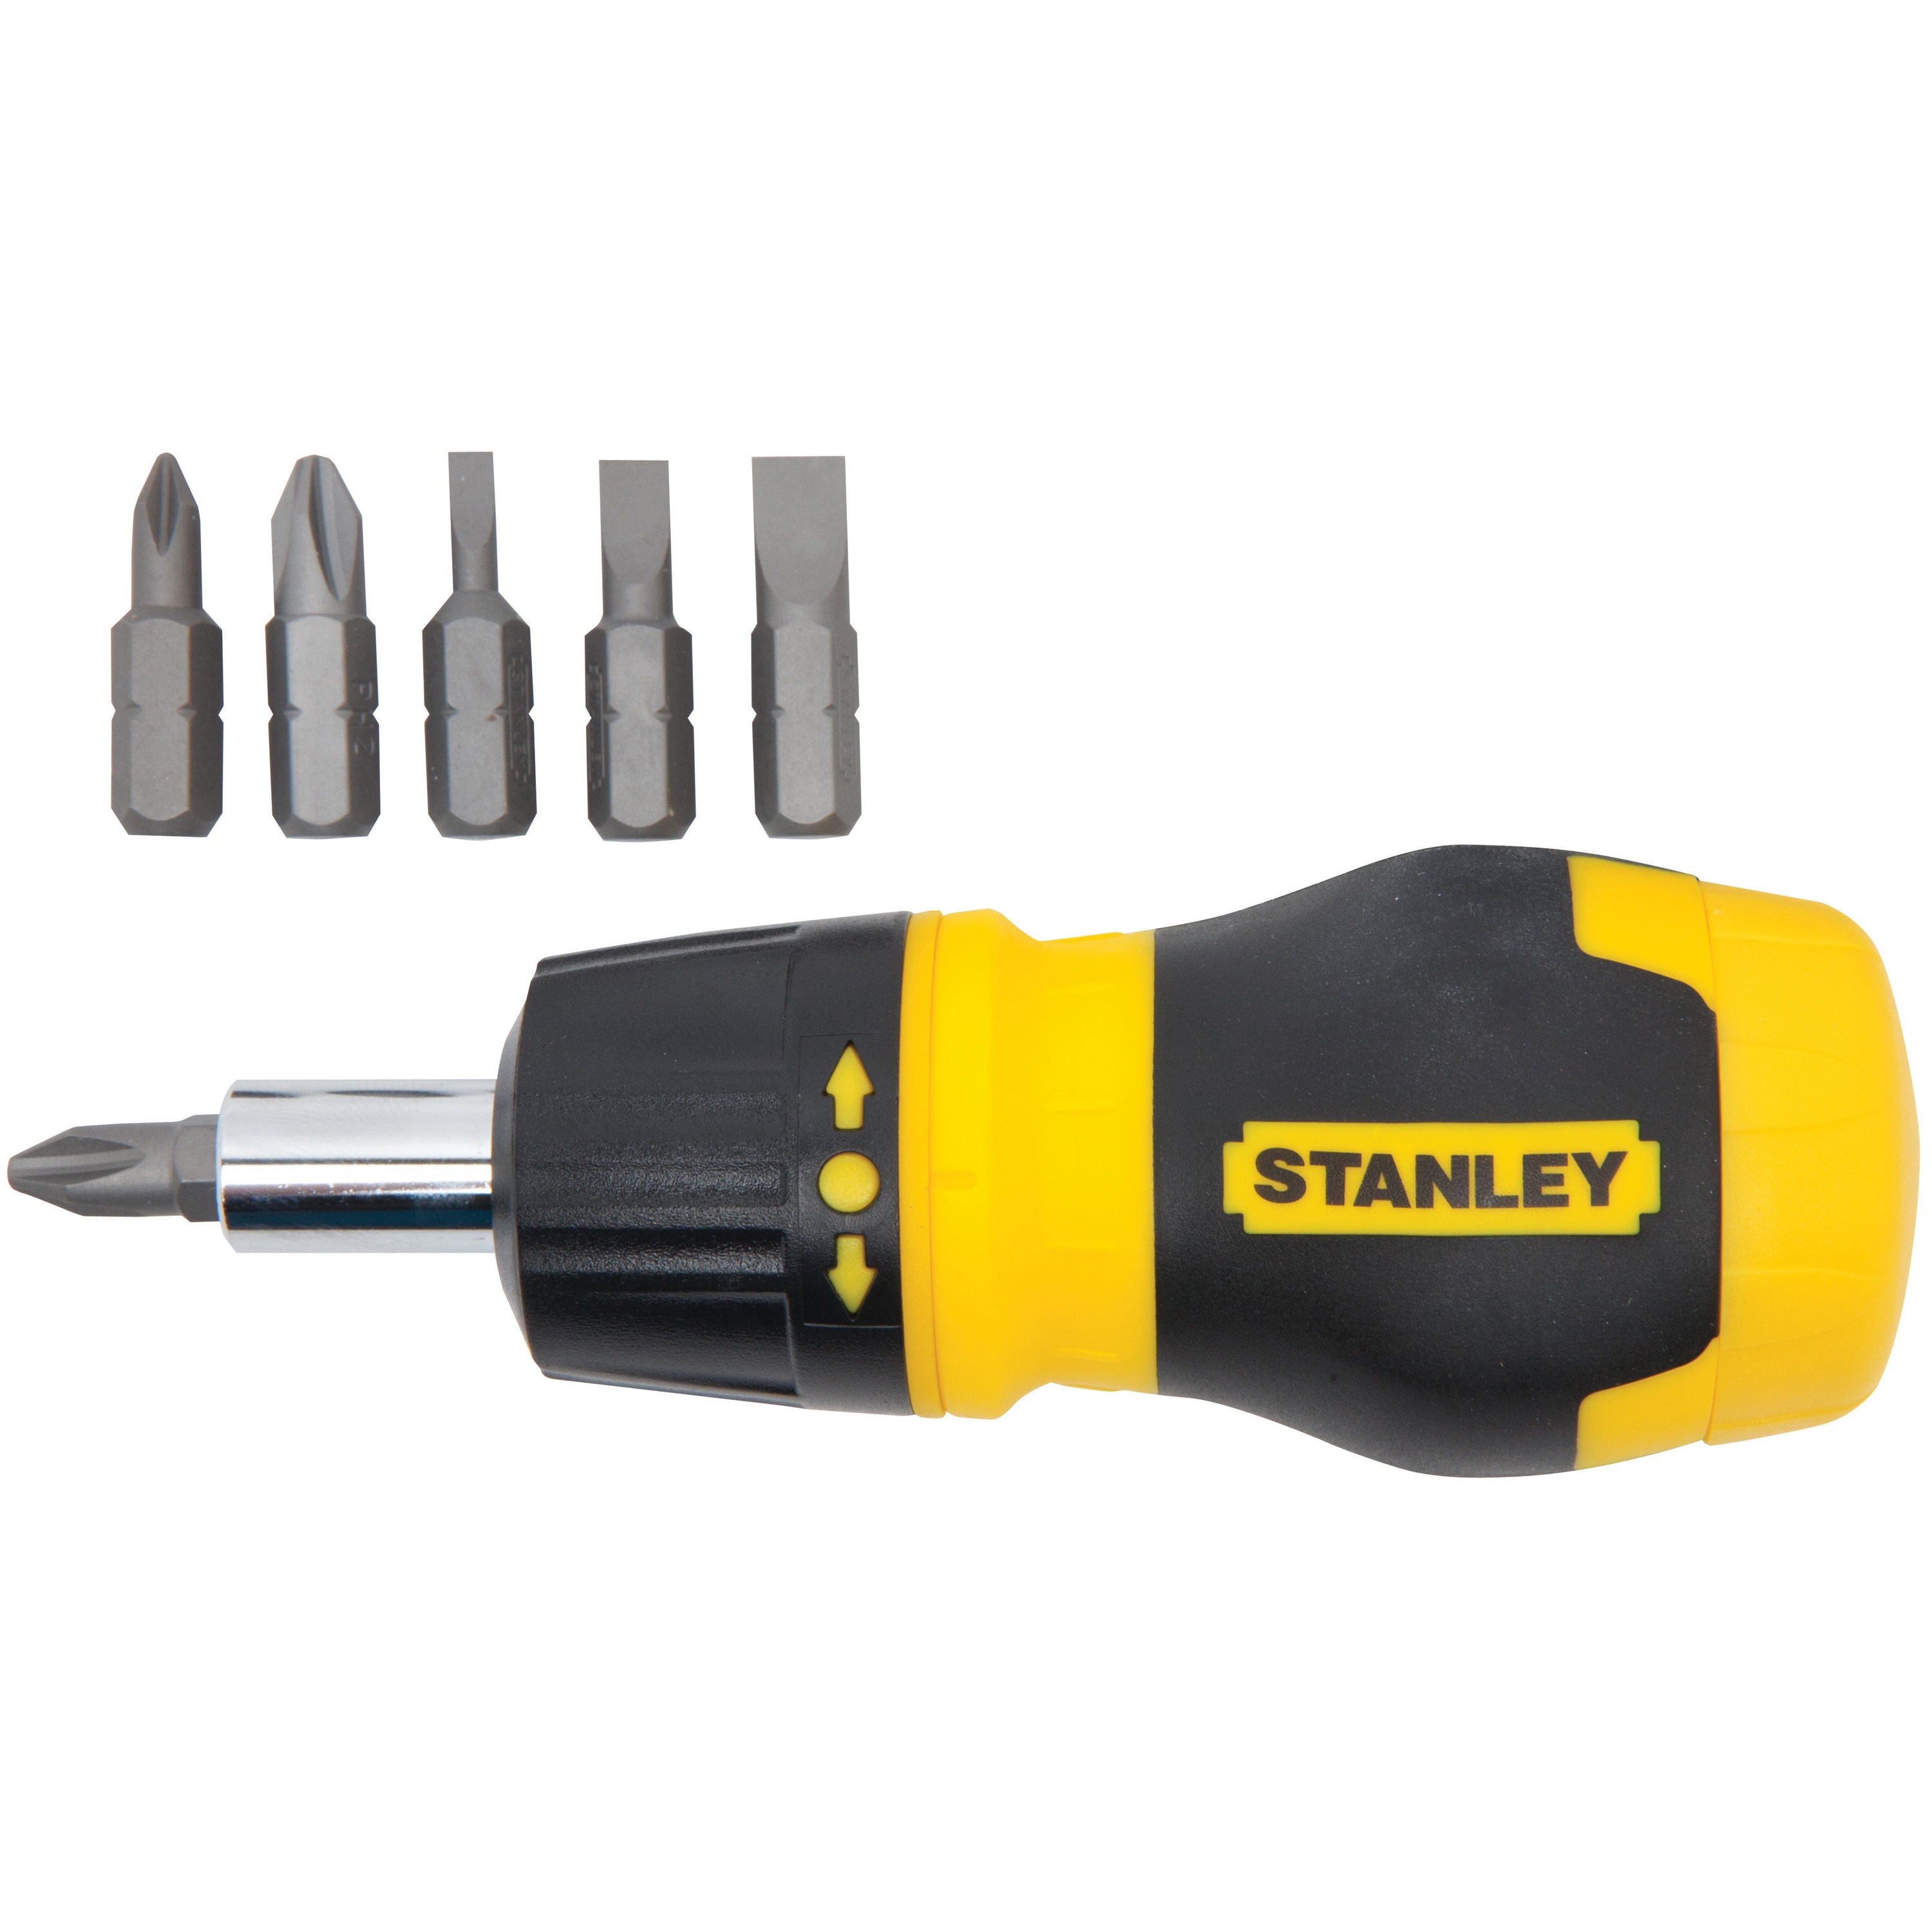 Stanley multibit ratchet screw driver and bits